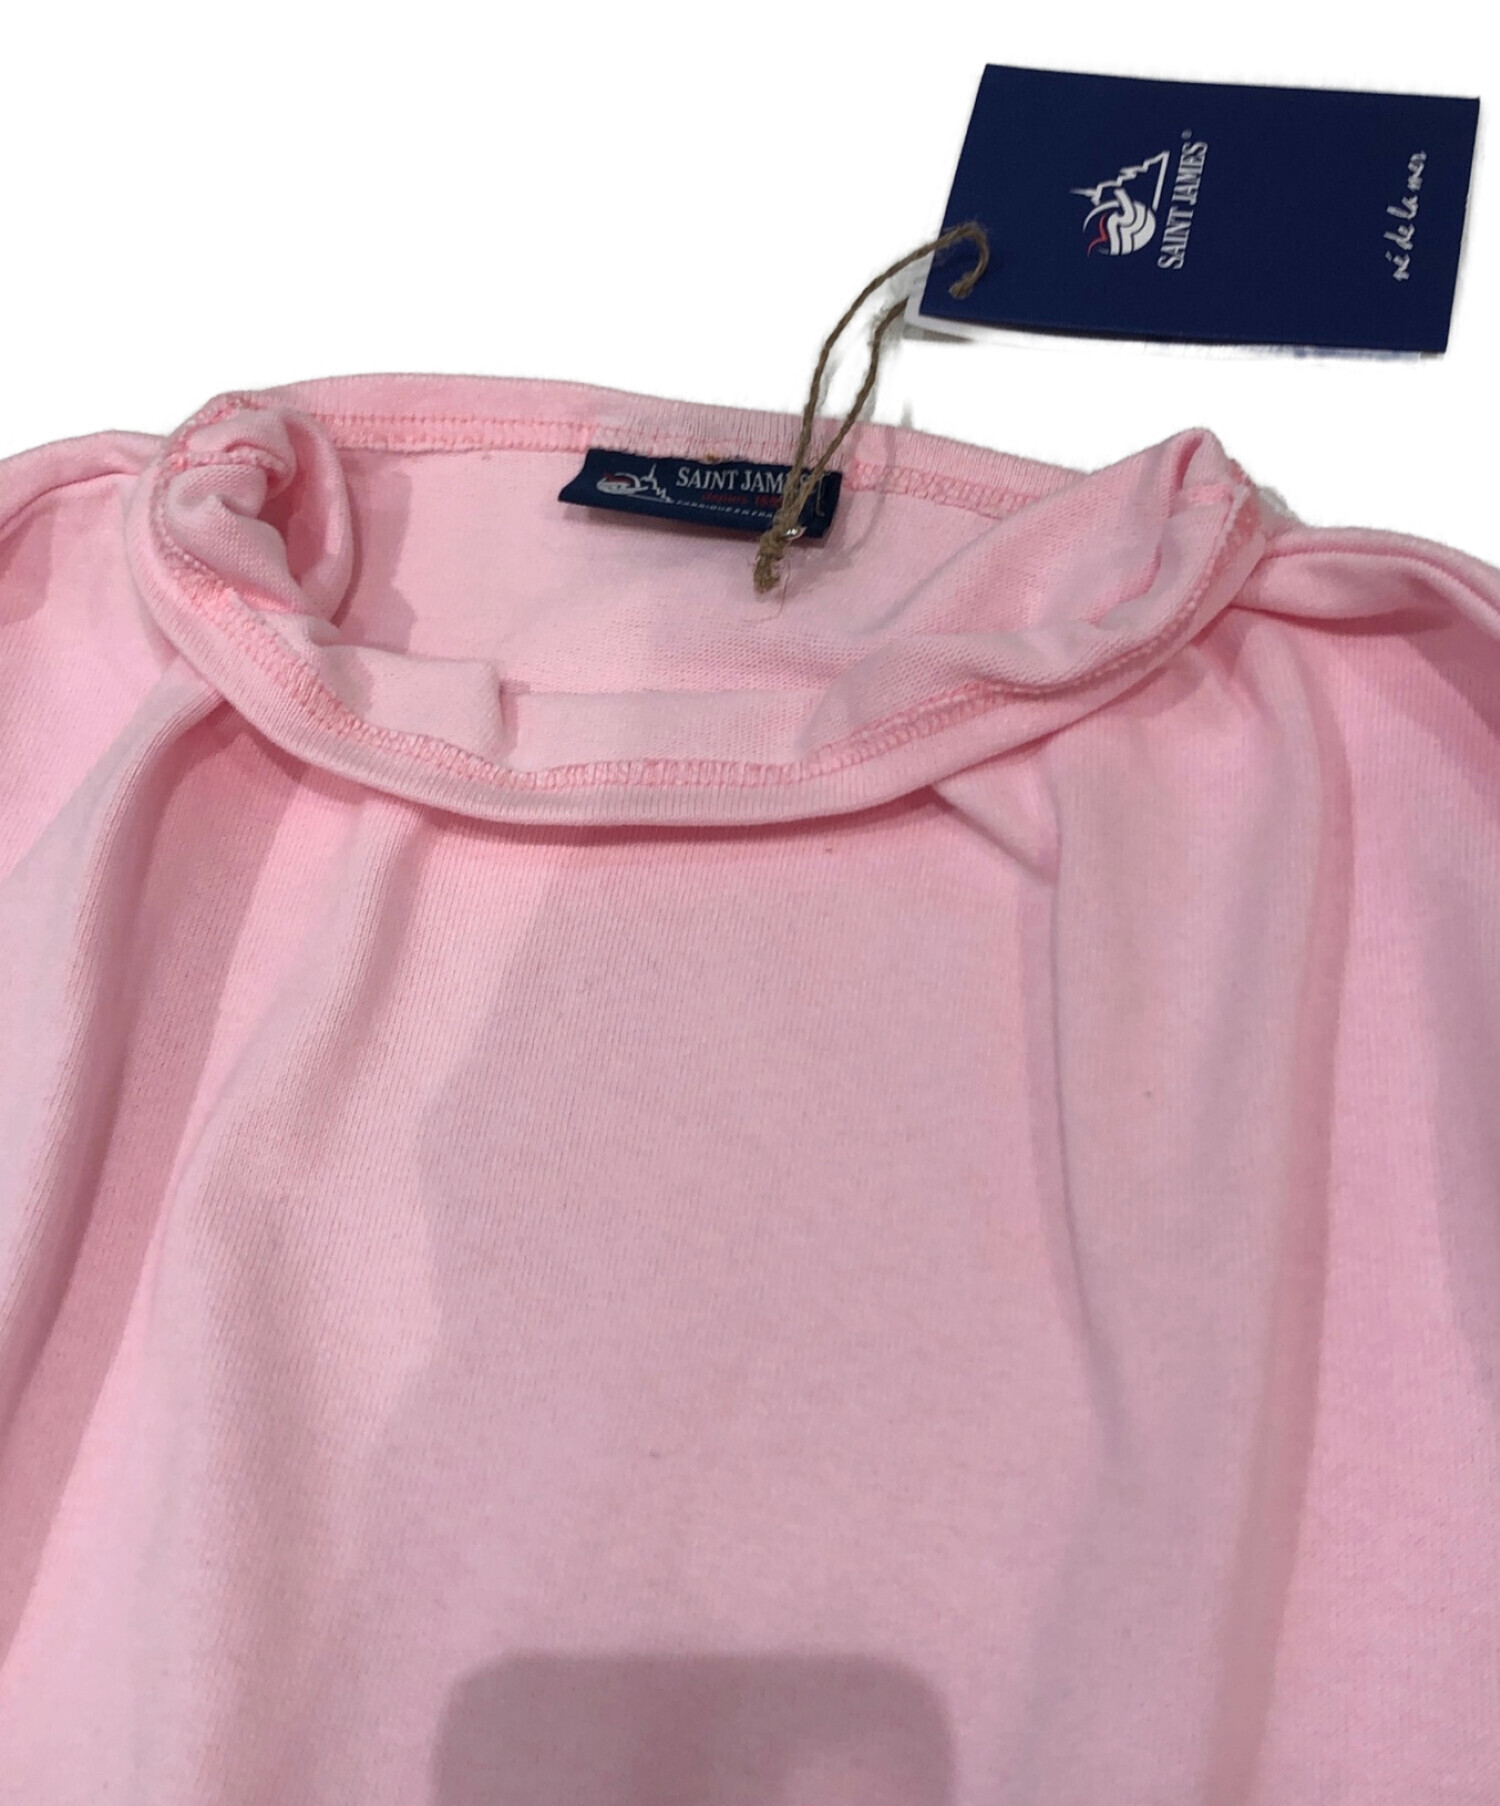 SAINT JAMES (セントジェームス) バスクシャツ ピンク サイズ:T4 未使用品